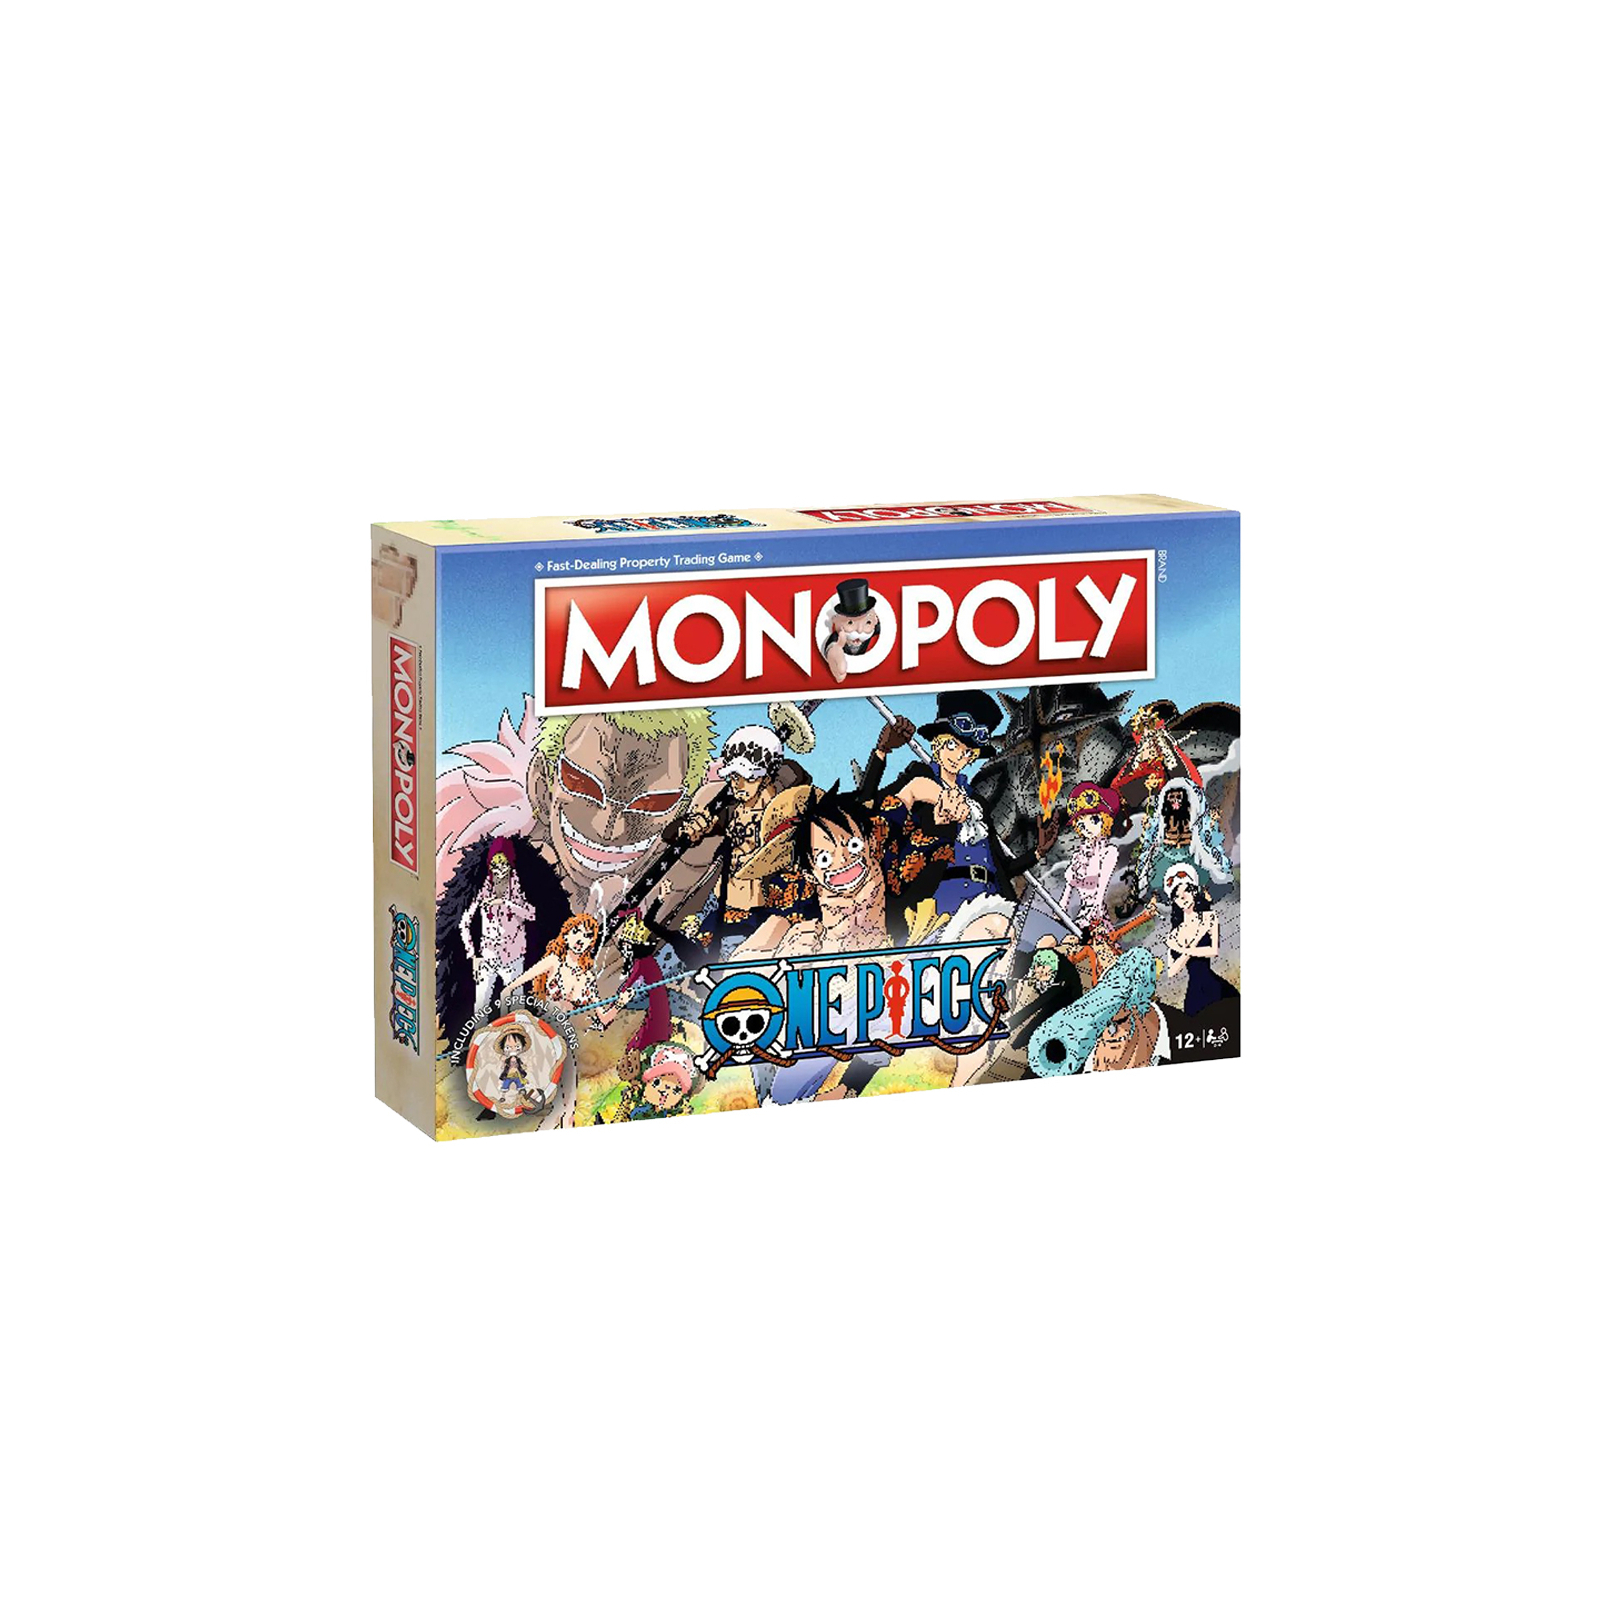 Настольная игра Winning Moves One Piece Monopoly (36948)